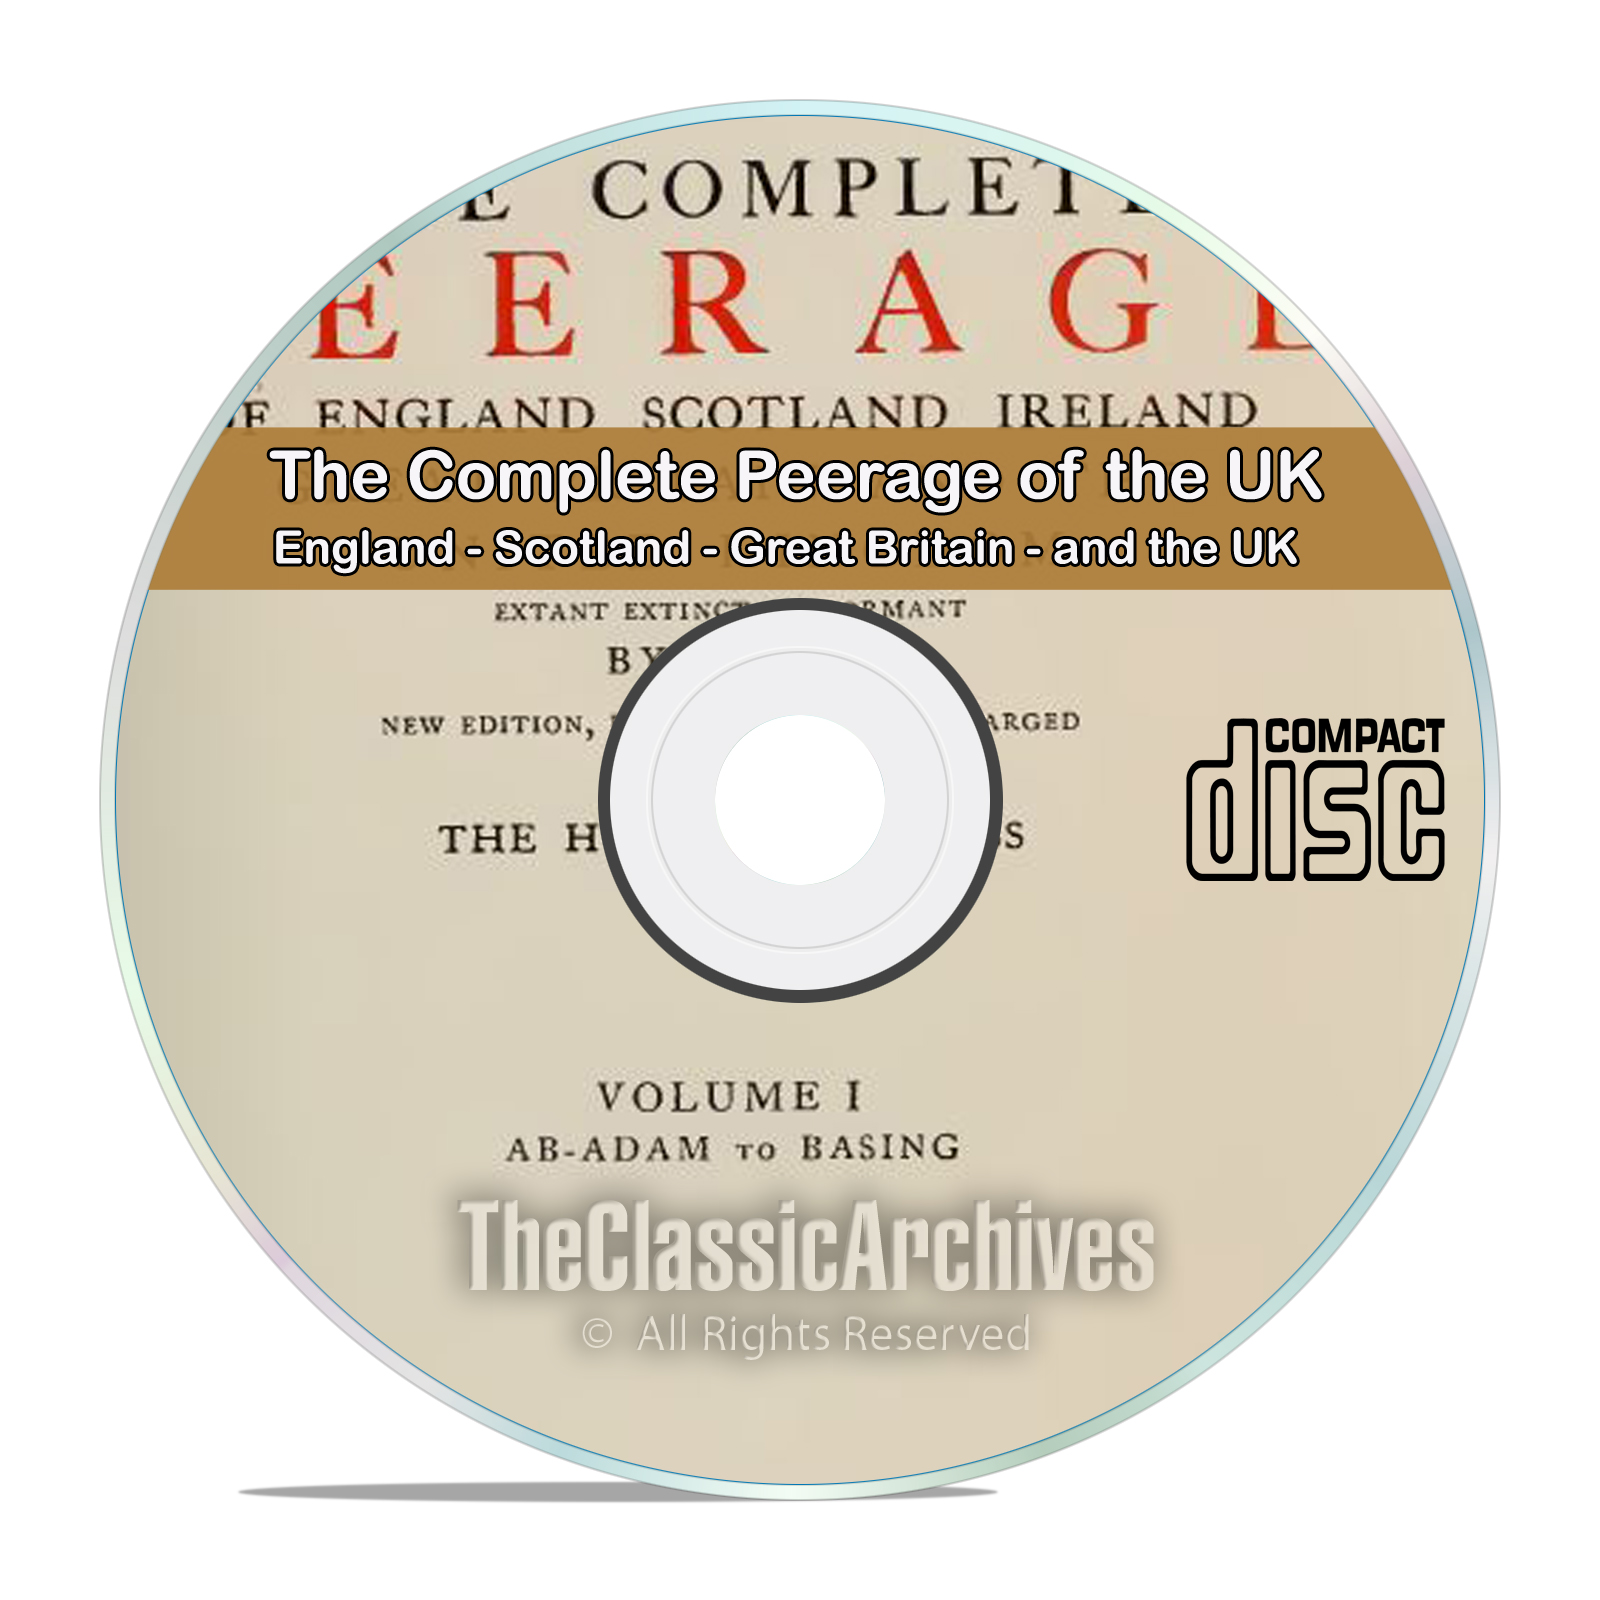 The Complete Peerage of England, Scotland, Ireland, Great Britain, UK CD